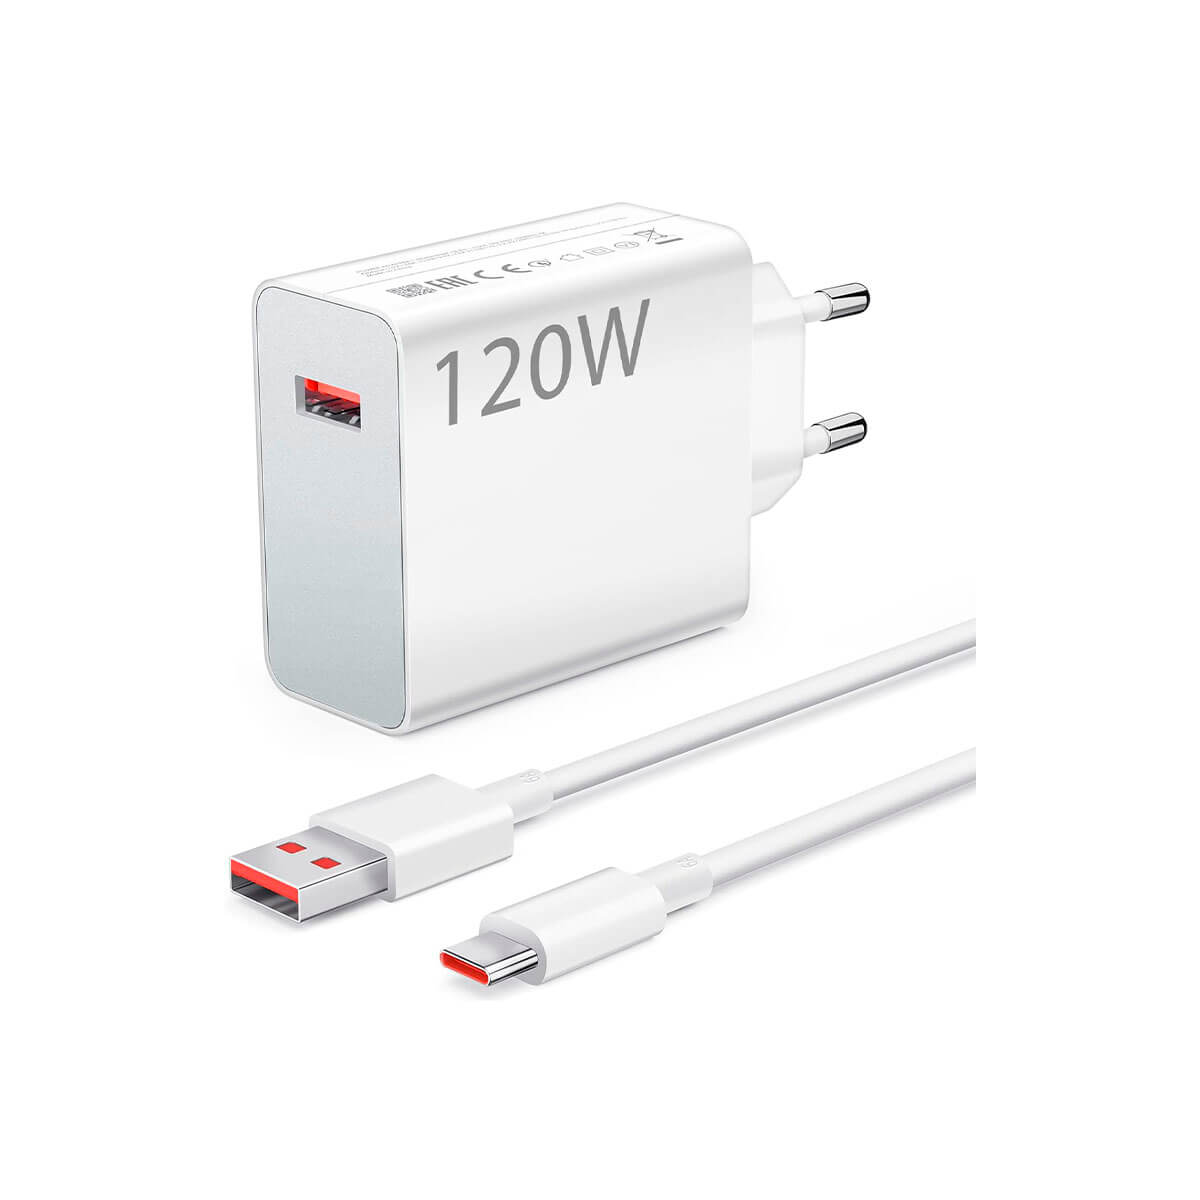 Xiaomi charging combo 120w cargador rapido usb-a + cable de datos usb-c  blanco mdy-13-ee, CXI120CC, Accesorios